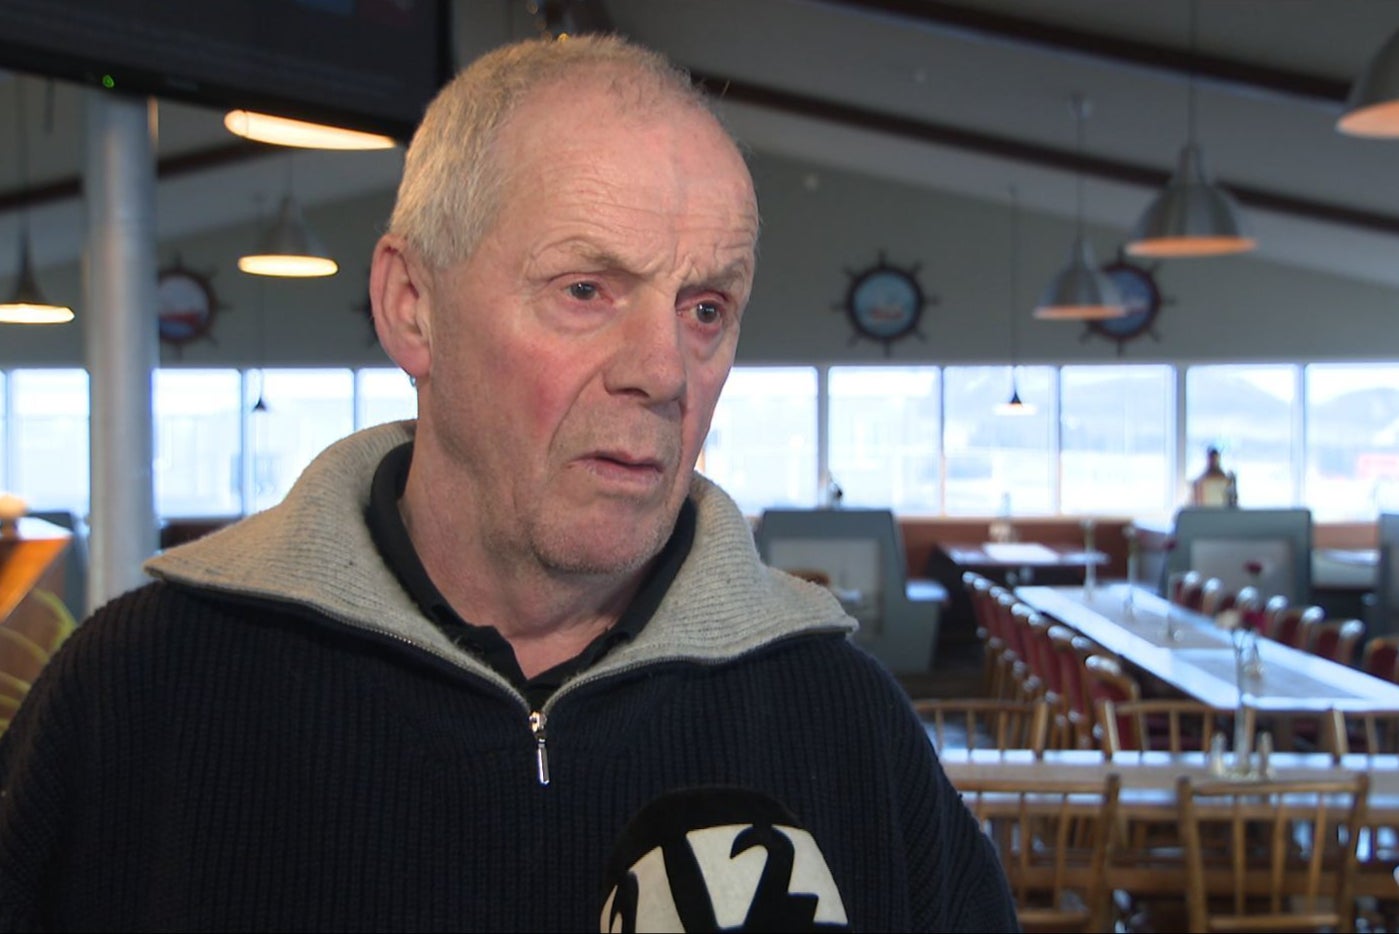 Ólaf Þórðarson speaks to local media after defying evacuation orders